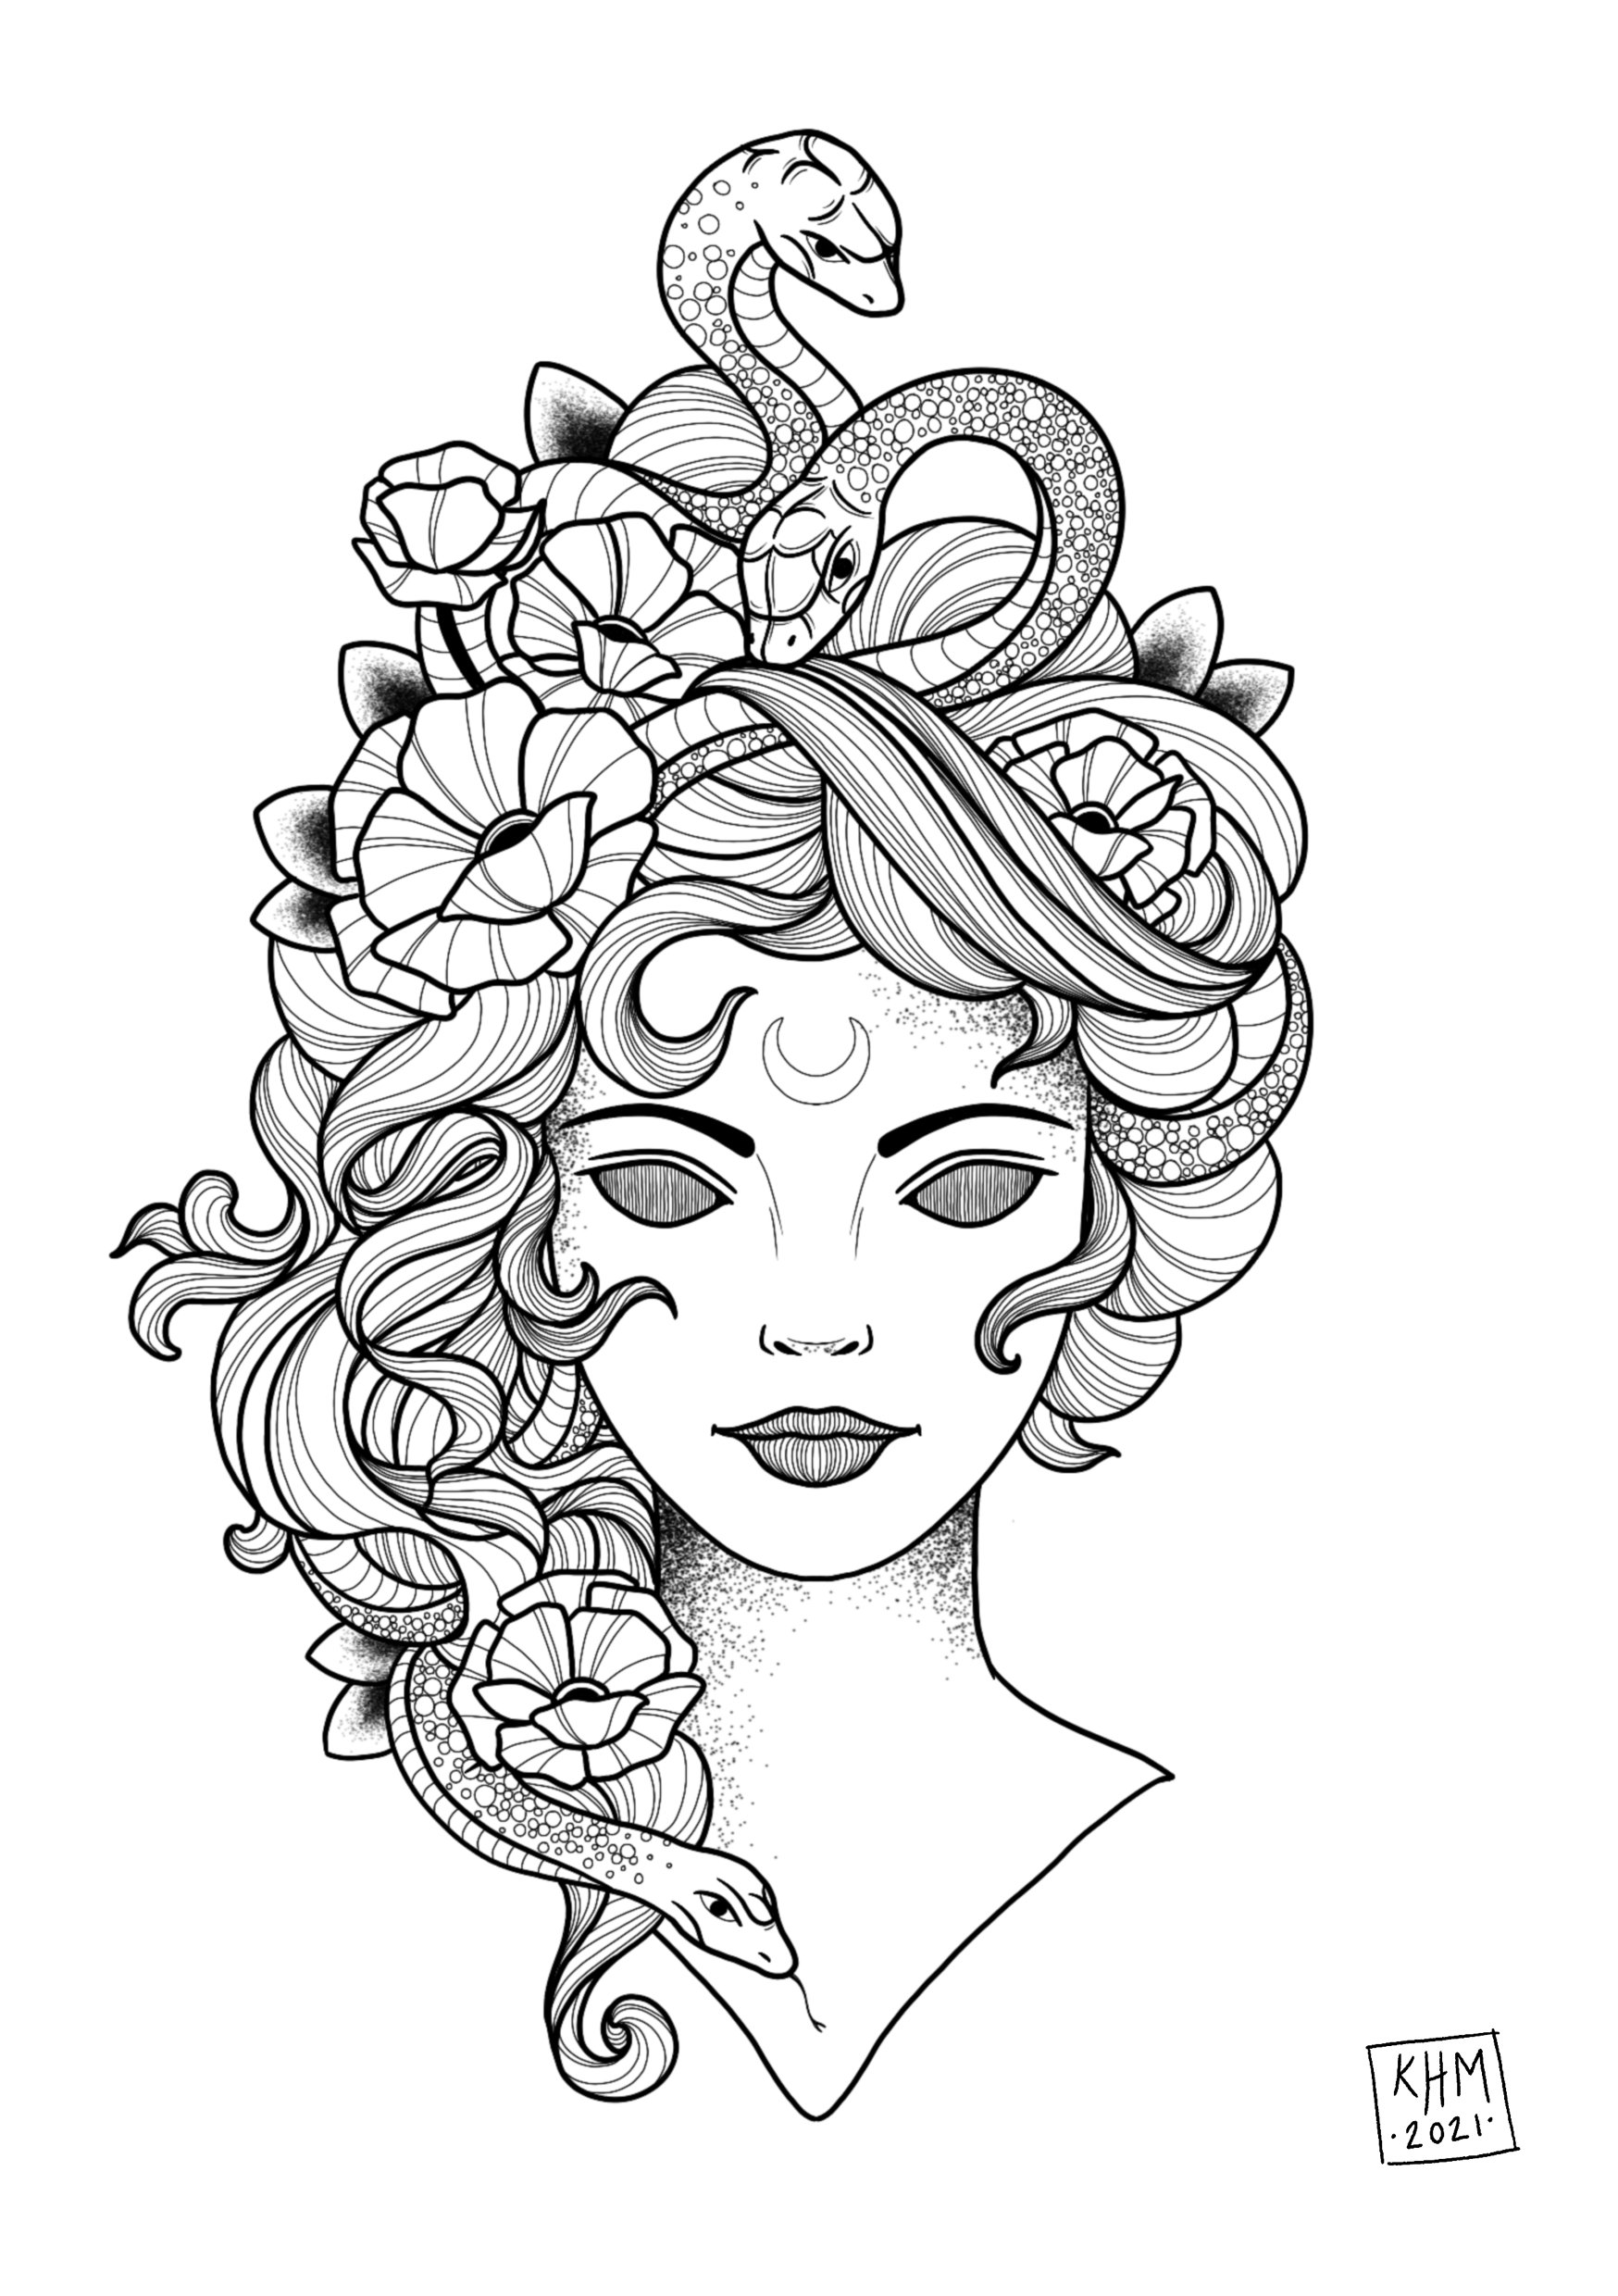 Medusa with Flowers by Shanoah Chapman : Tattoos